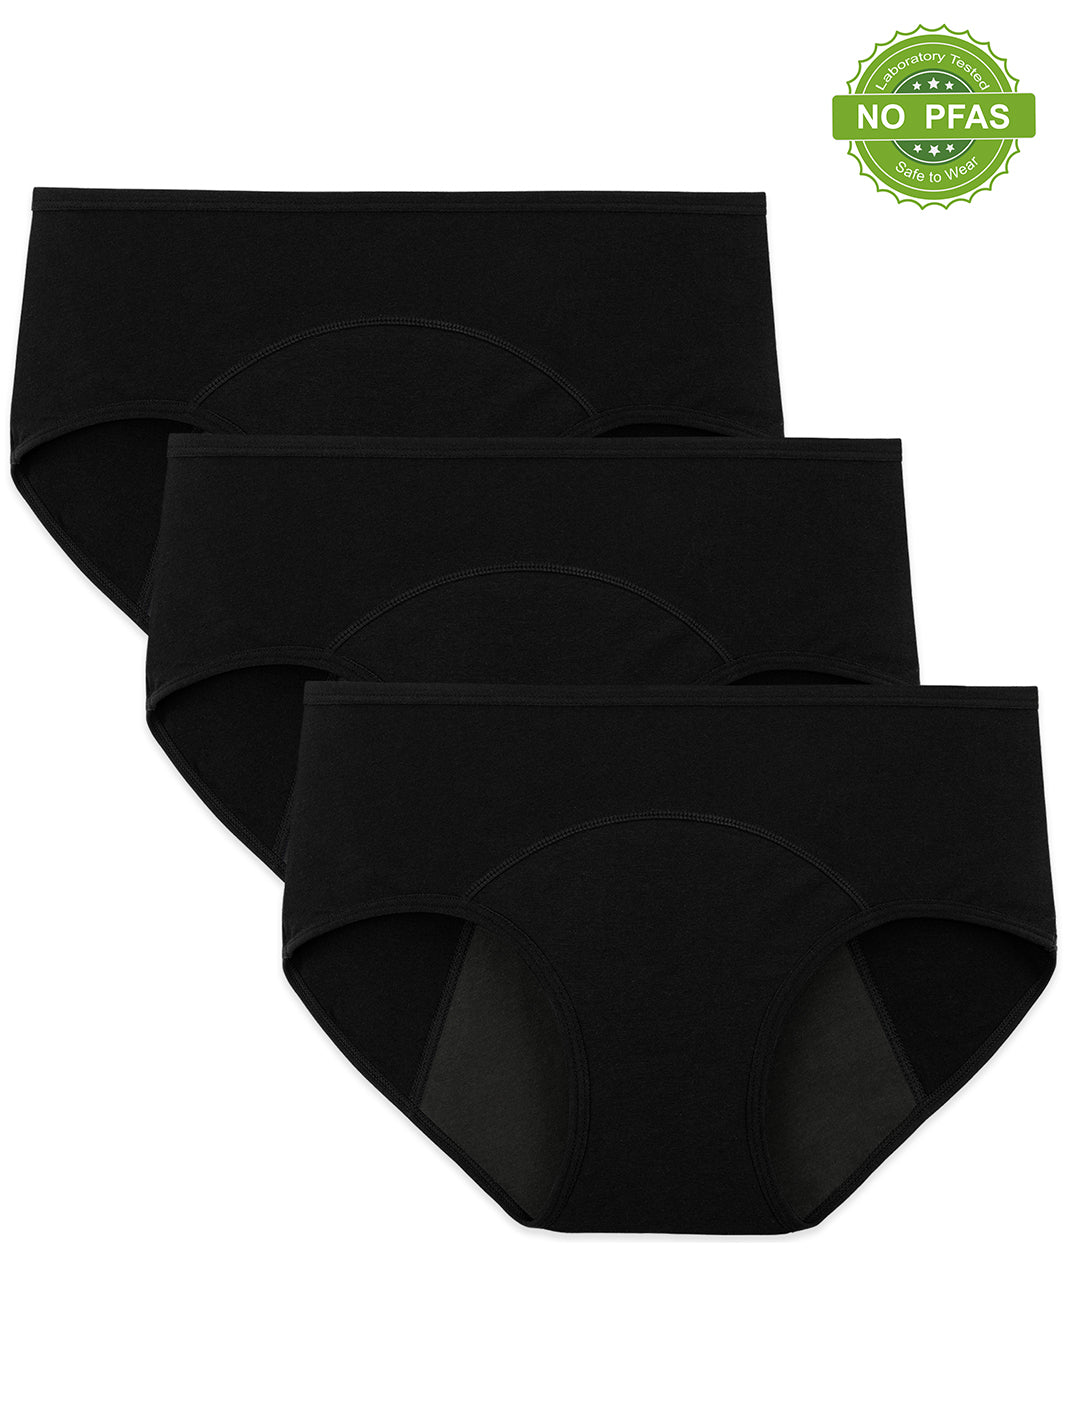 Shop Plus Size Period Leak Resistant Knickers in Black, Sizes 12-30